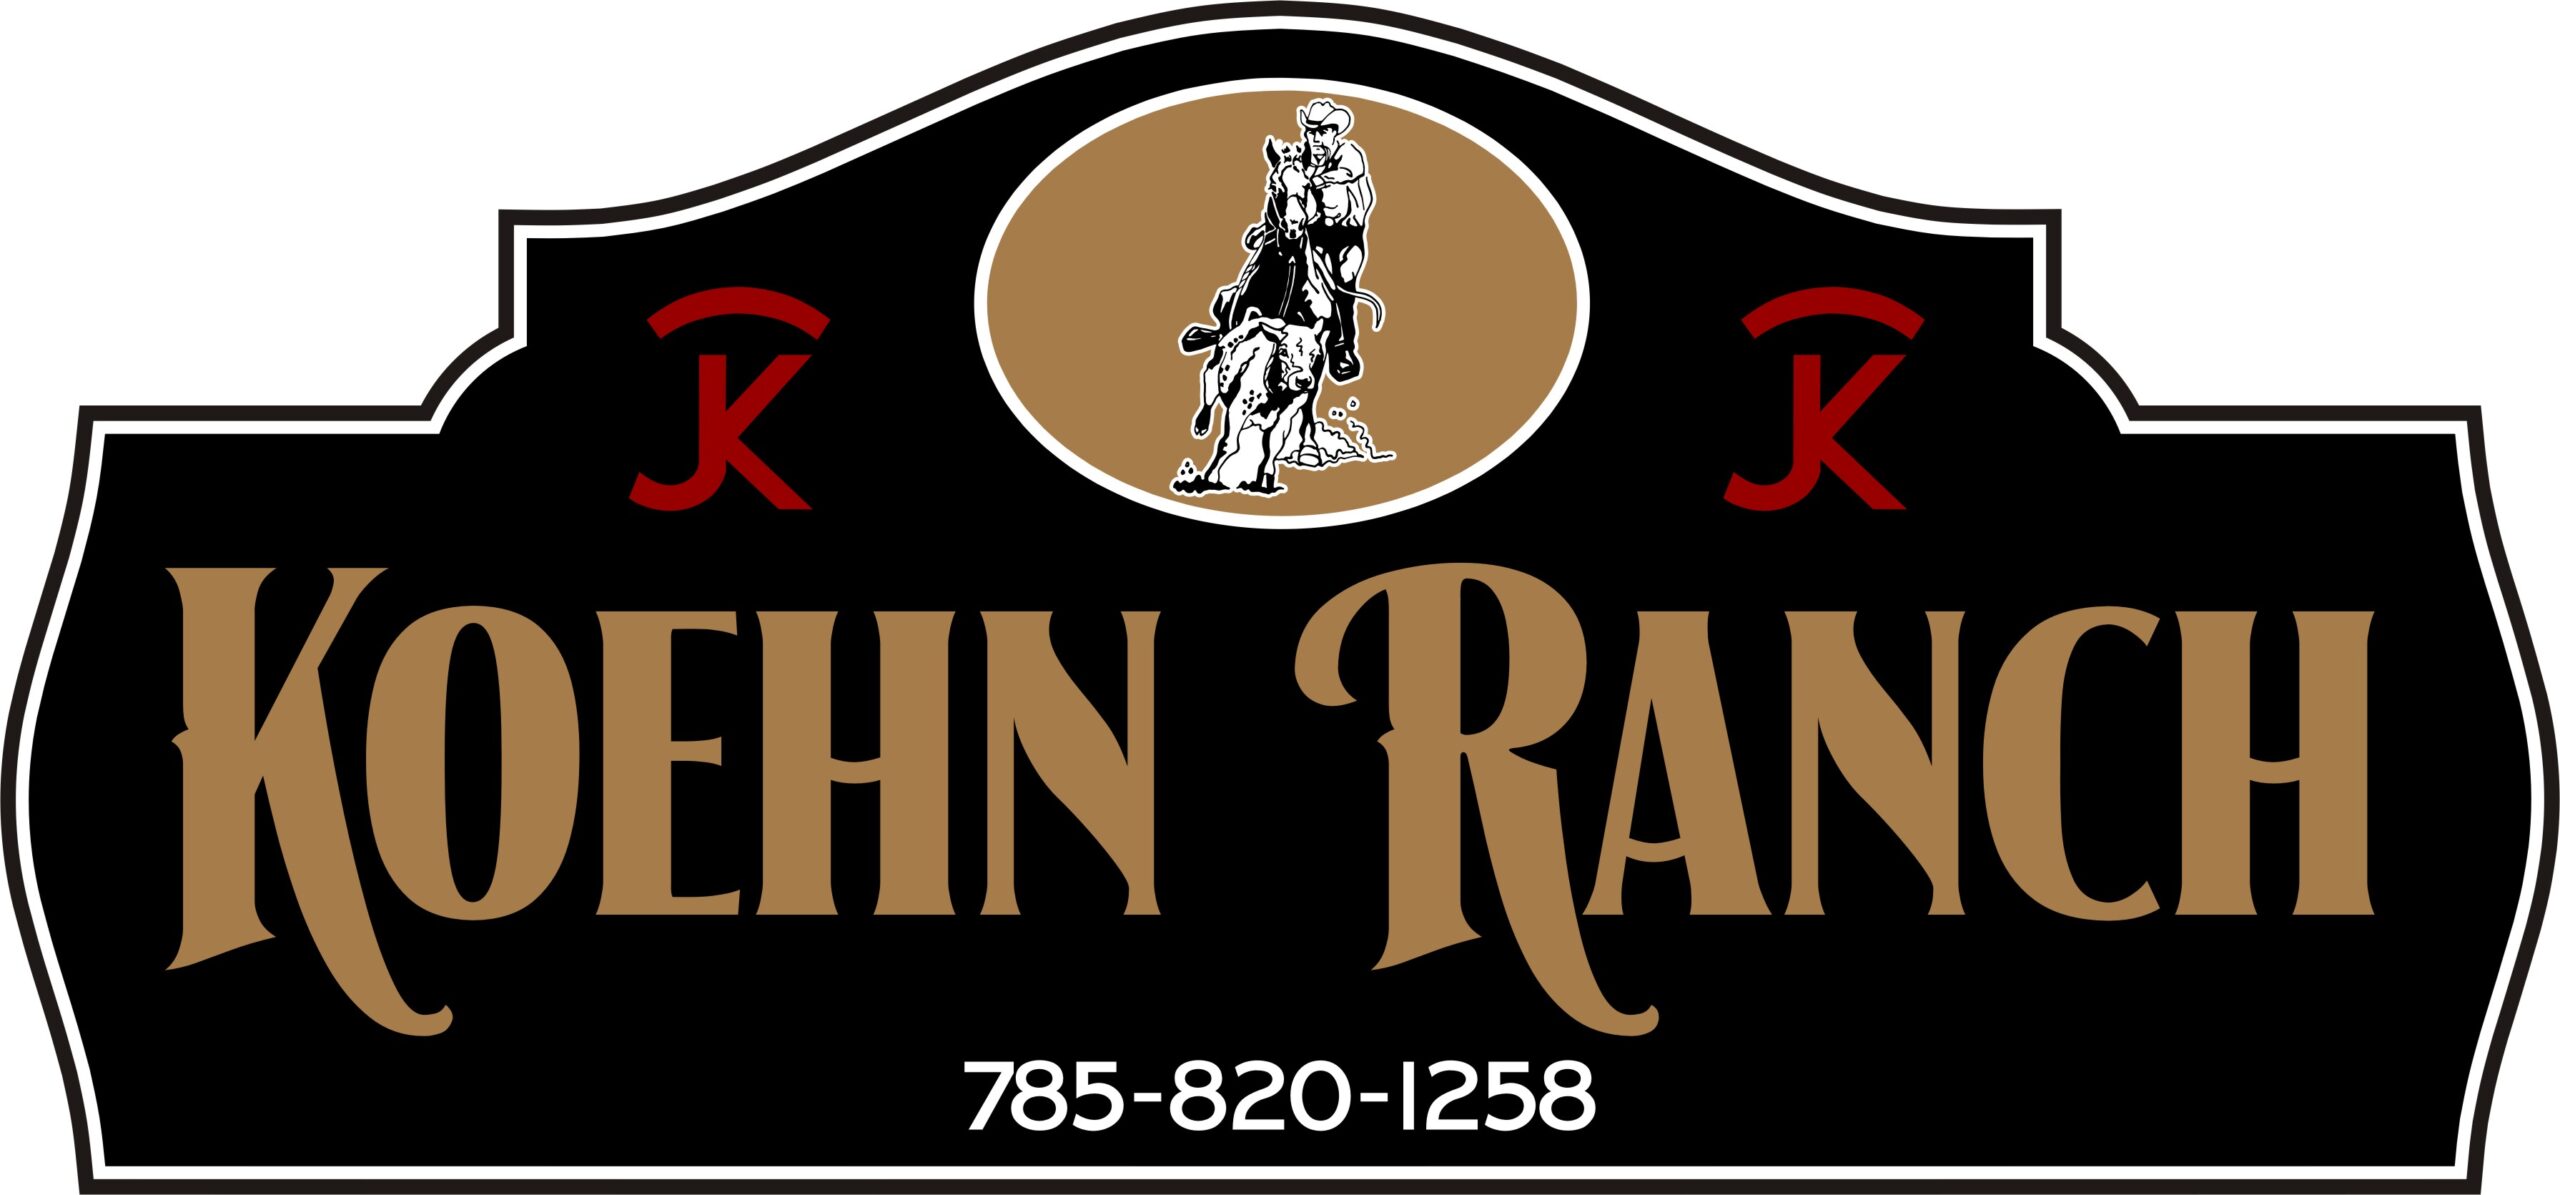 Koehn Ranch Salina Kansas